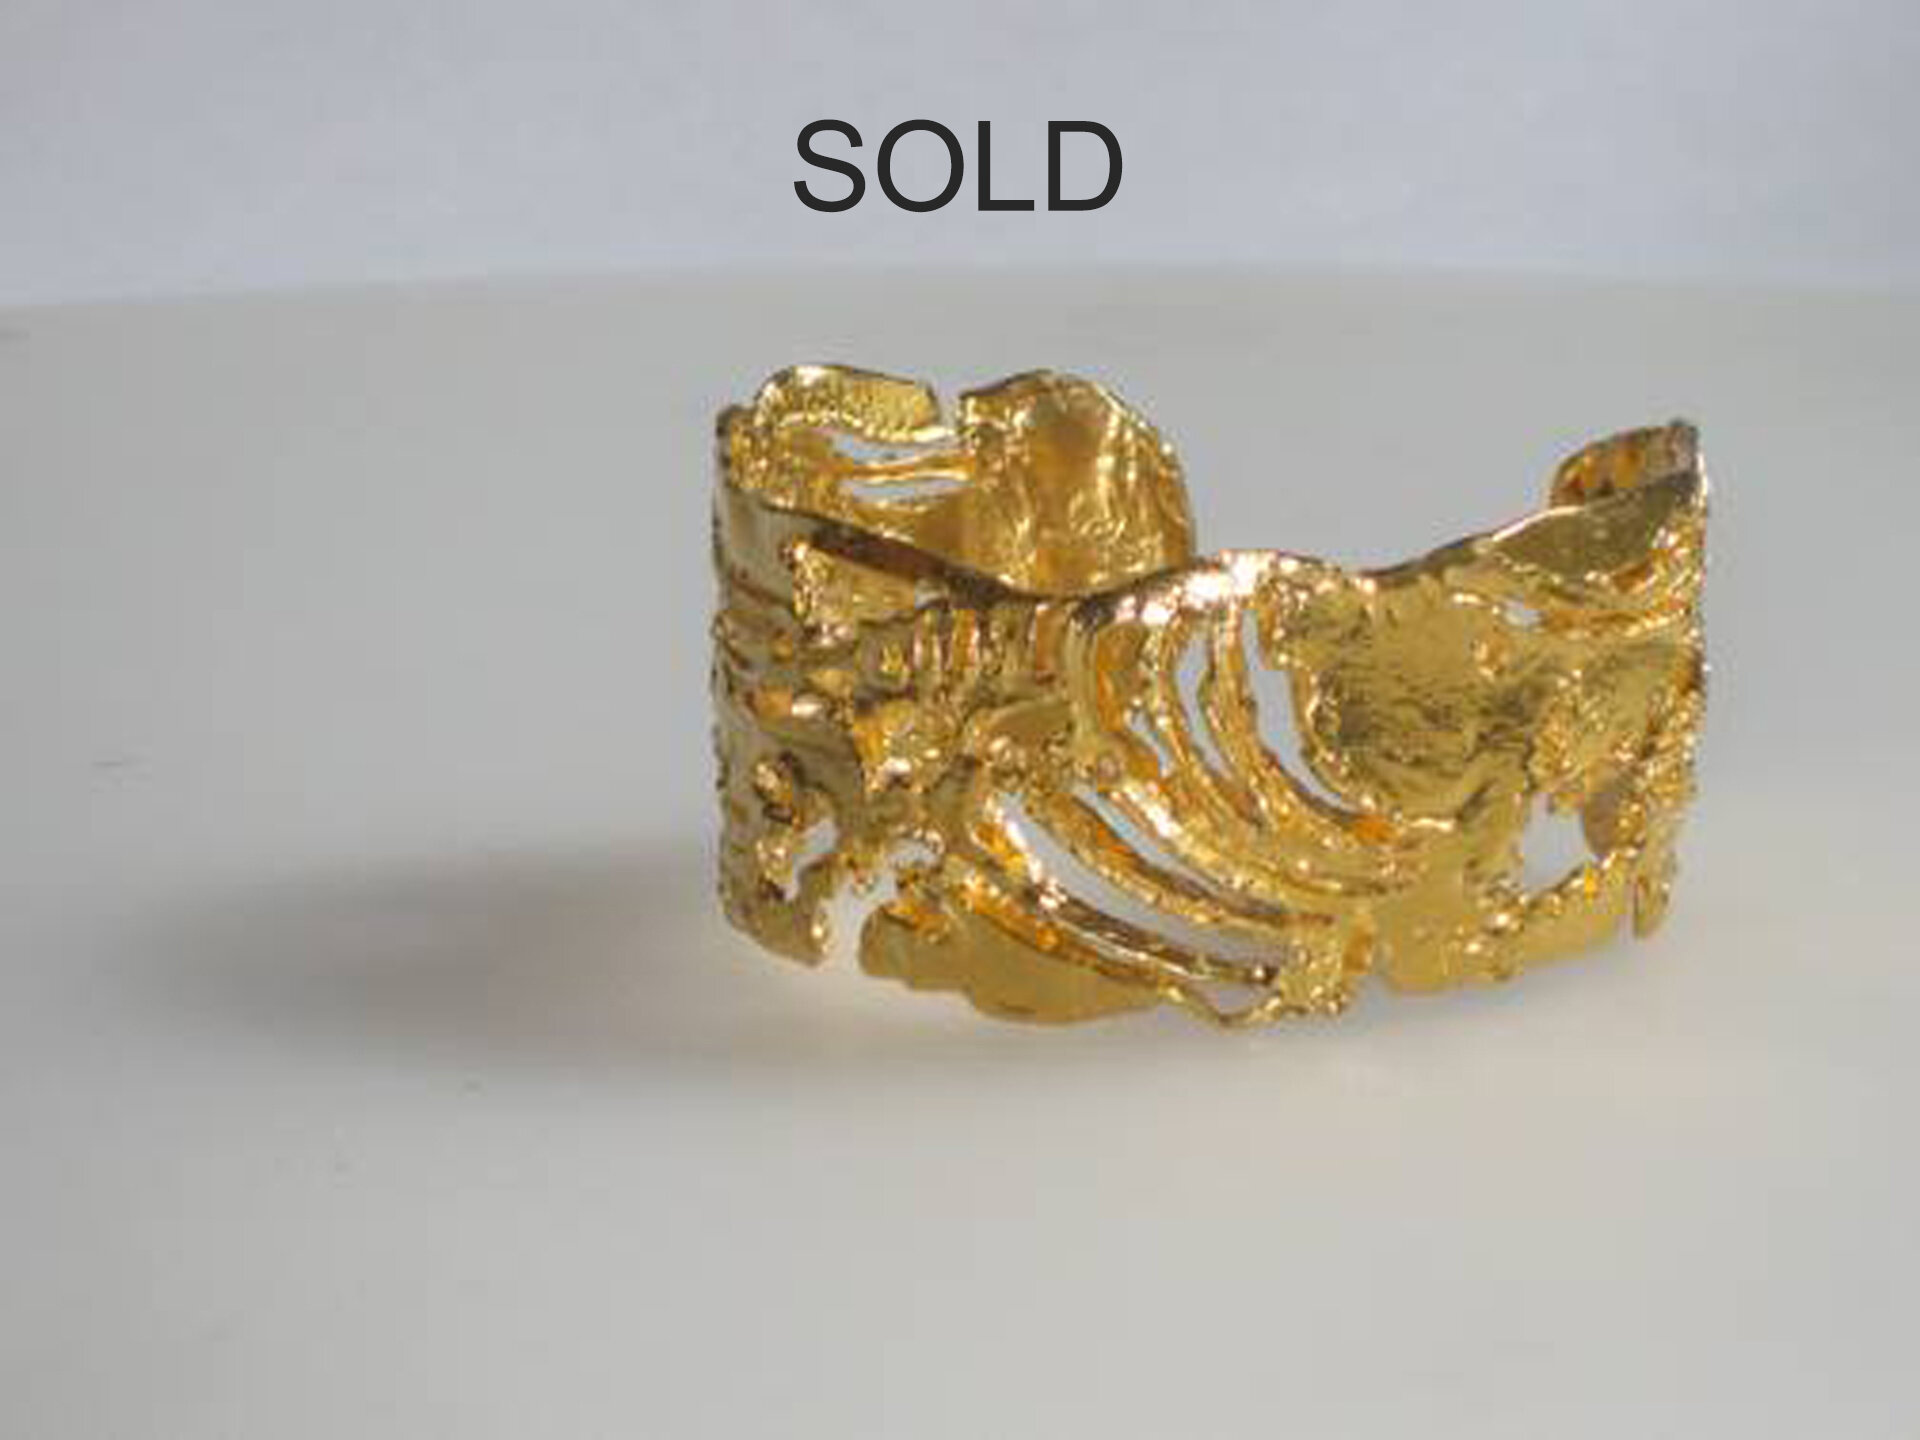 gold asia cuffsold.jpg